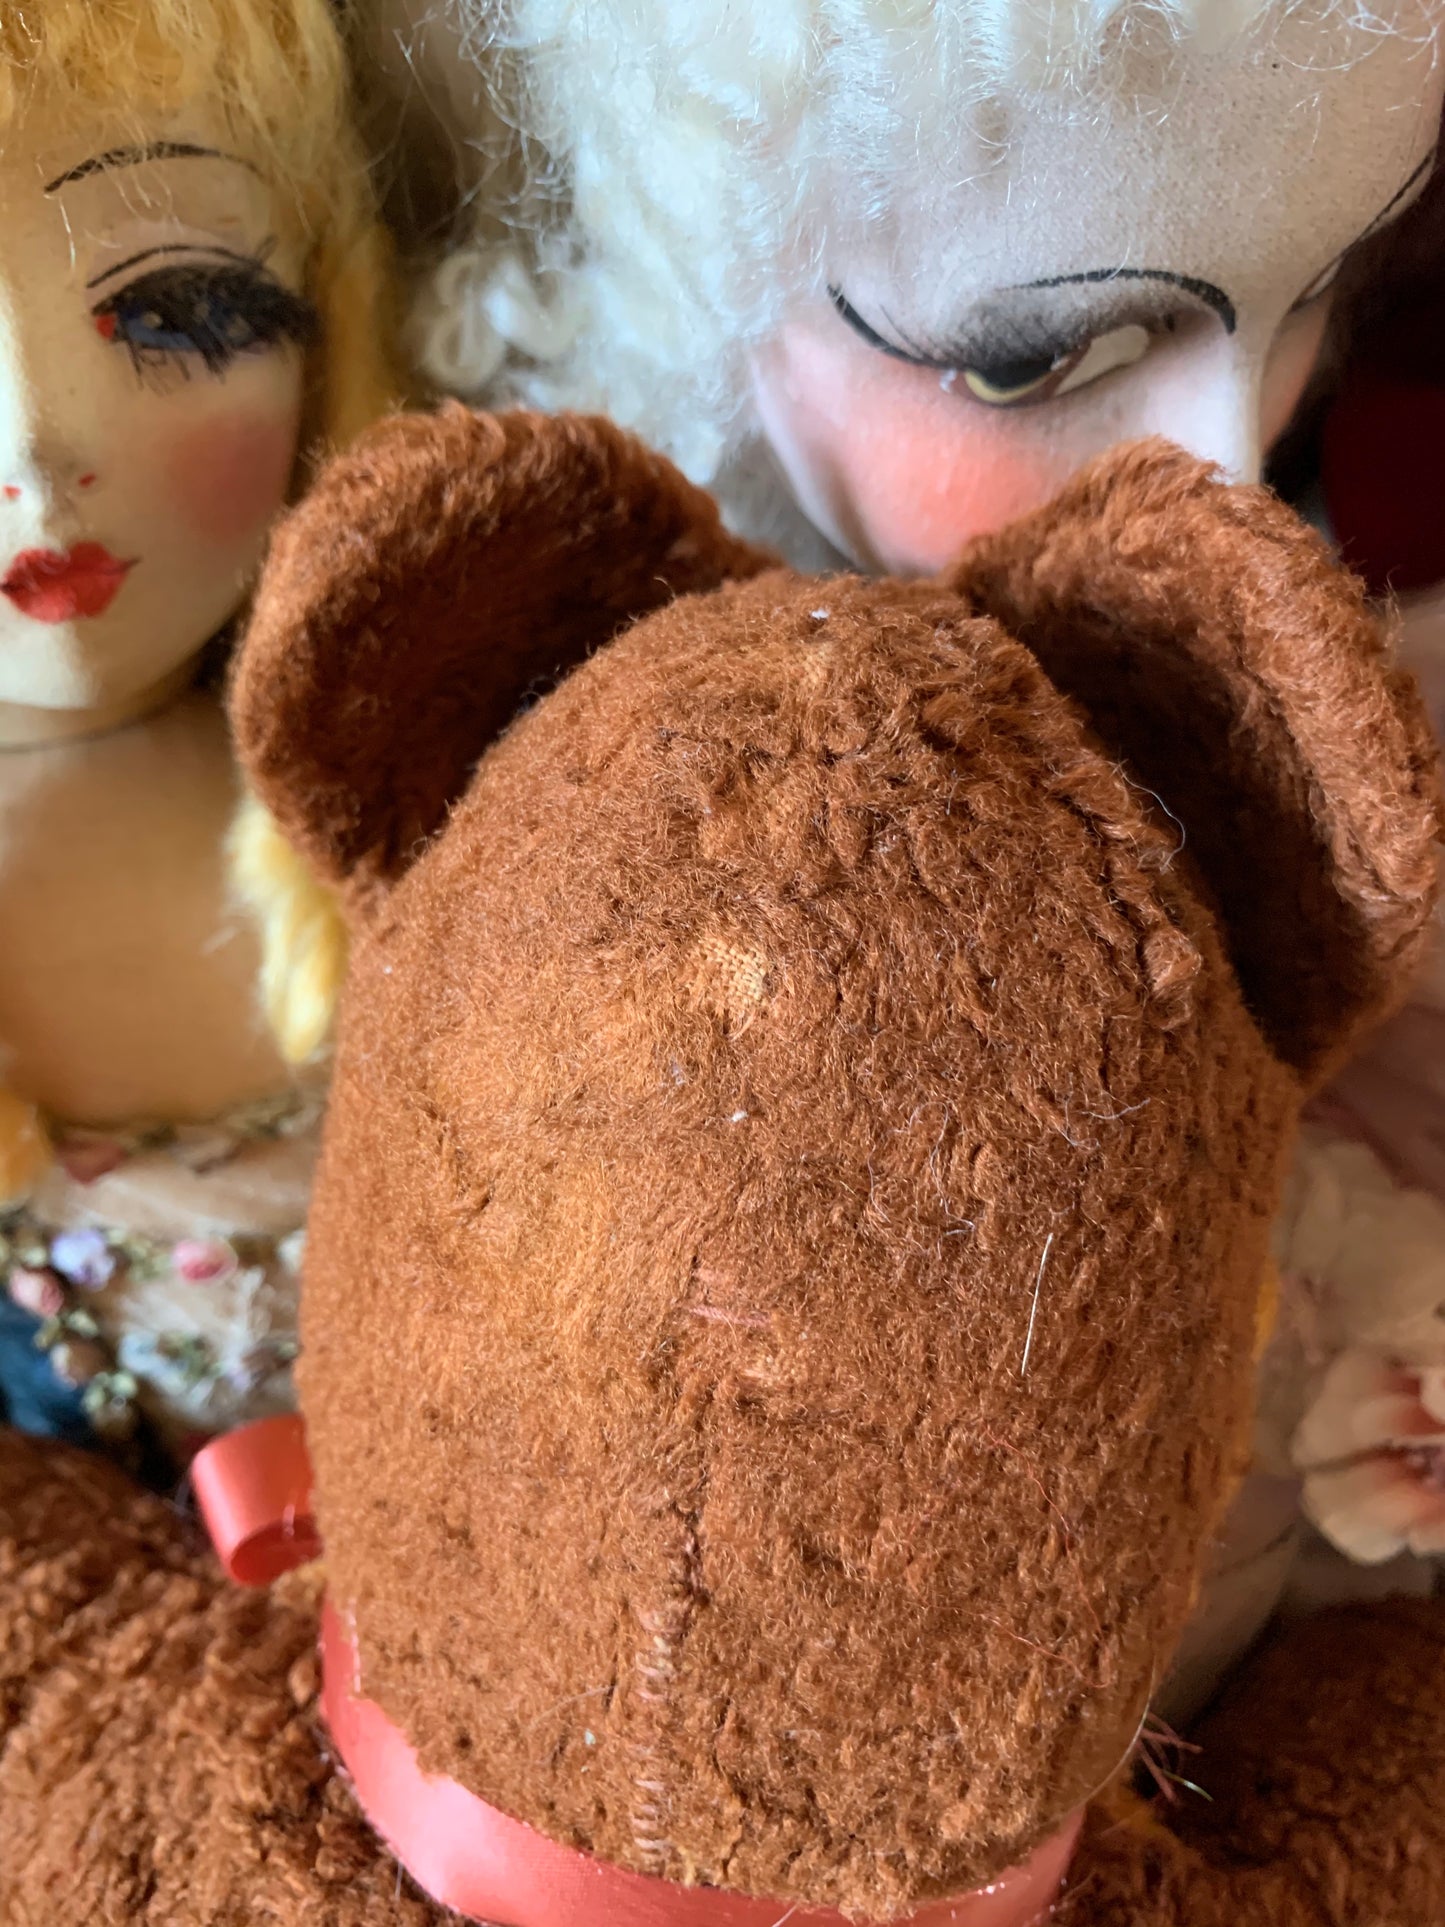 Vintage rubber face bear retro stuffed toy teddy